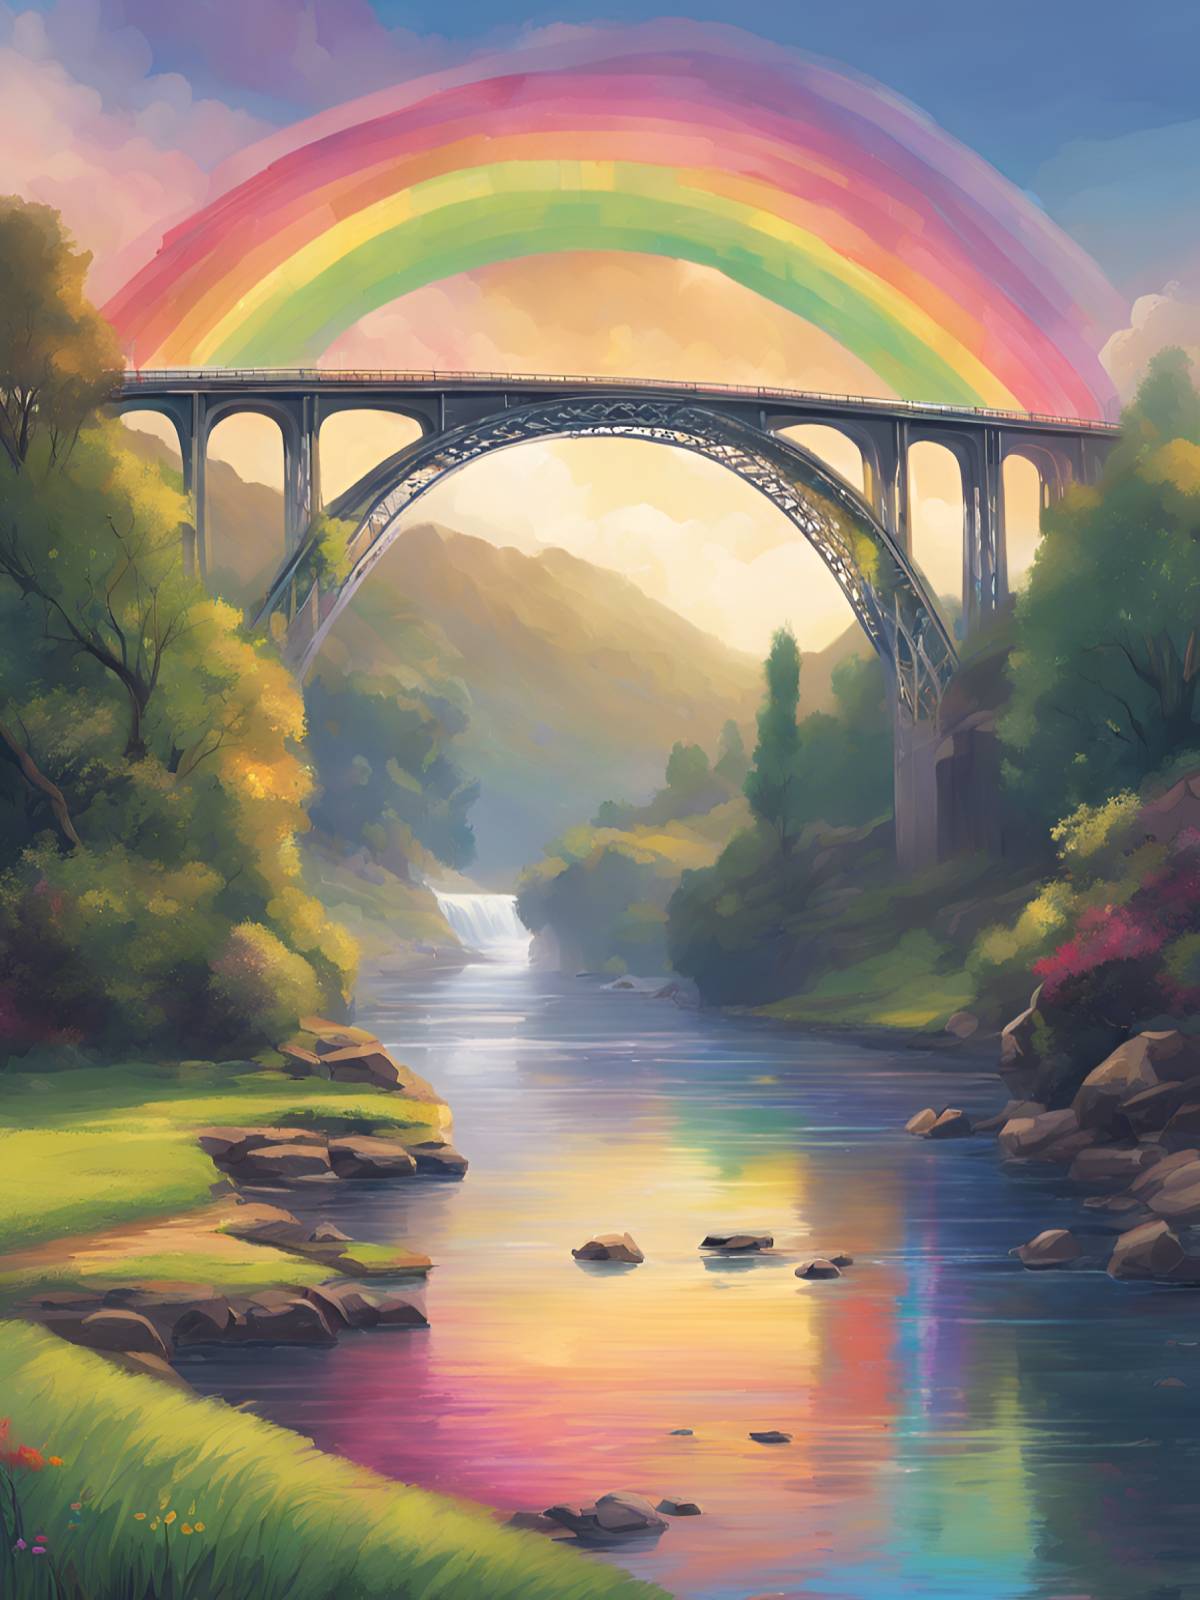 diamonds-wizard-diamond-painting-kit-Landscape-Rainbow-Rainbow-Bridge-original.jpg